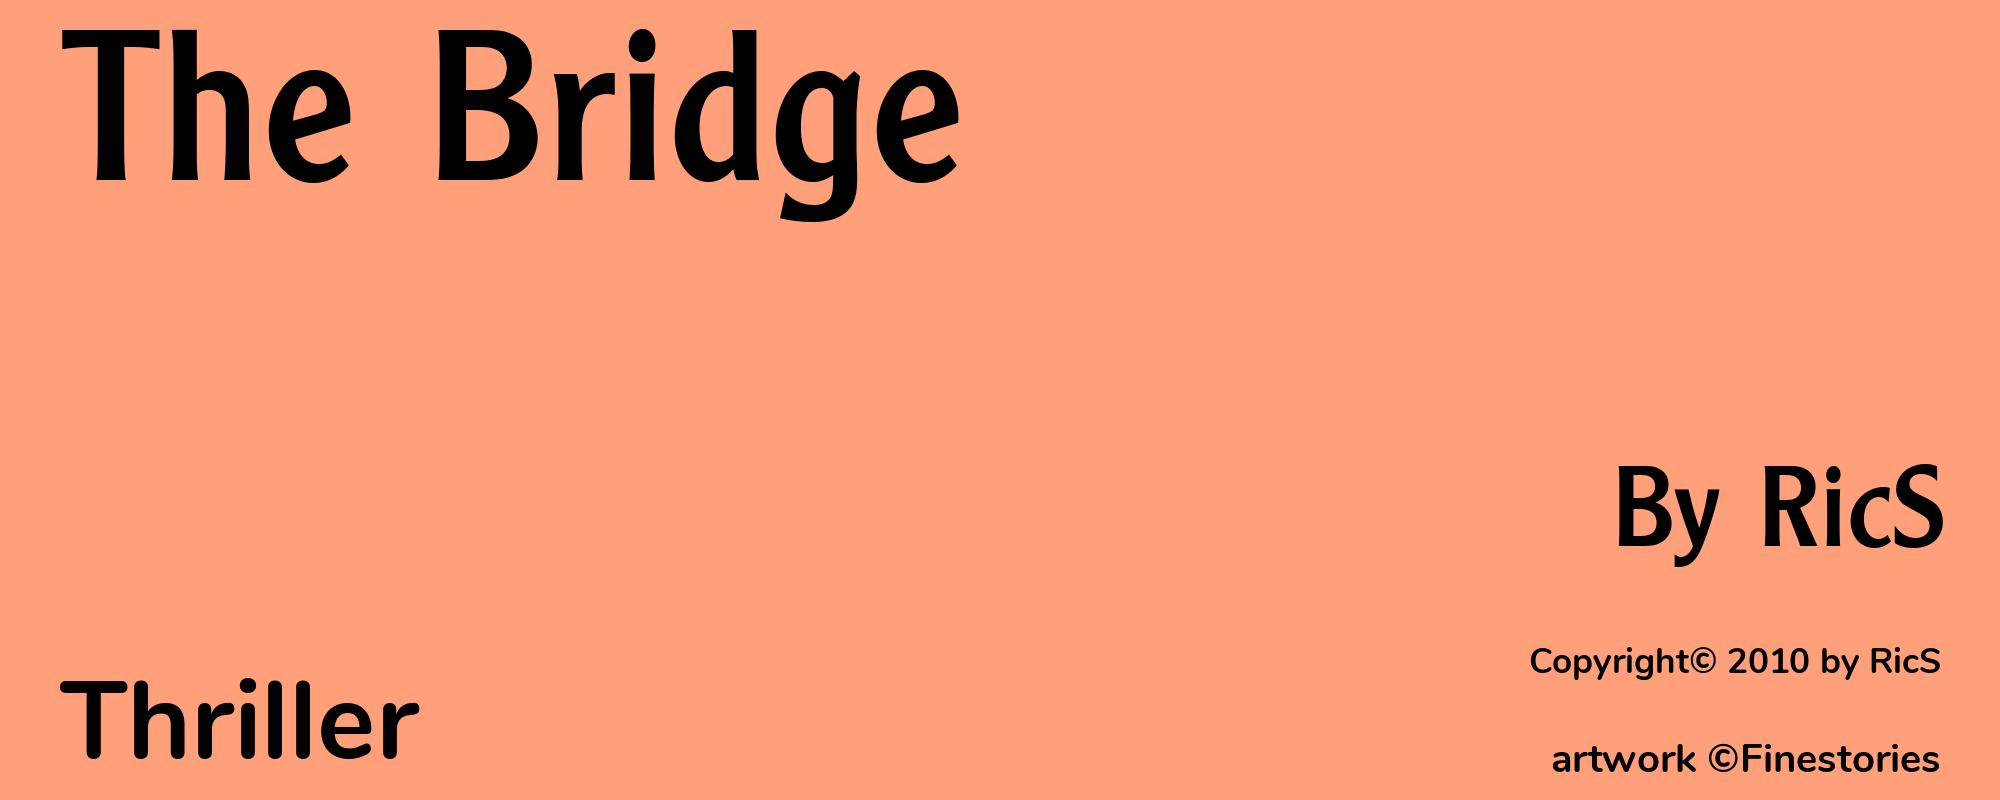 The Bridge - Cover